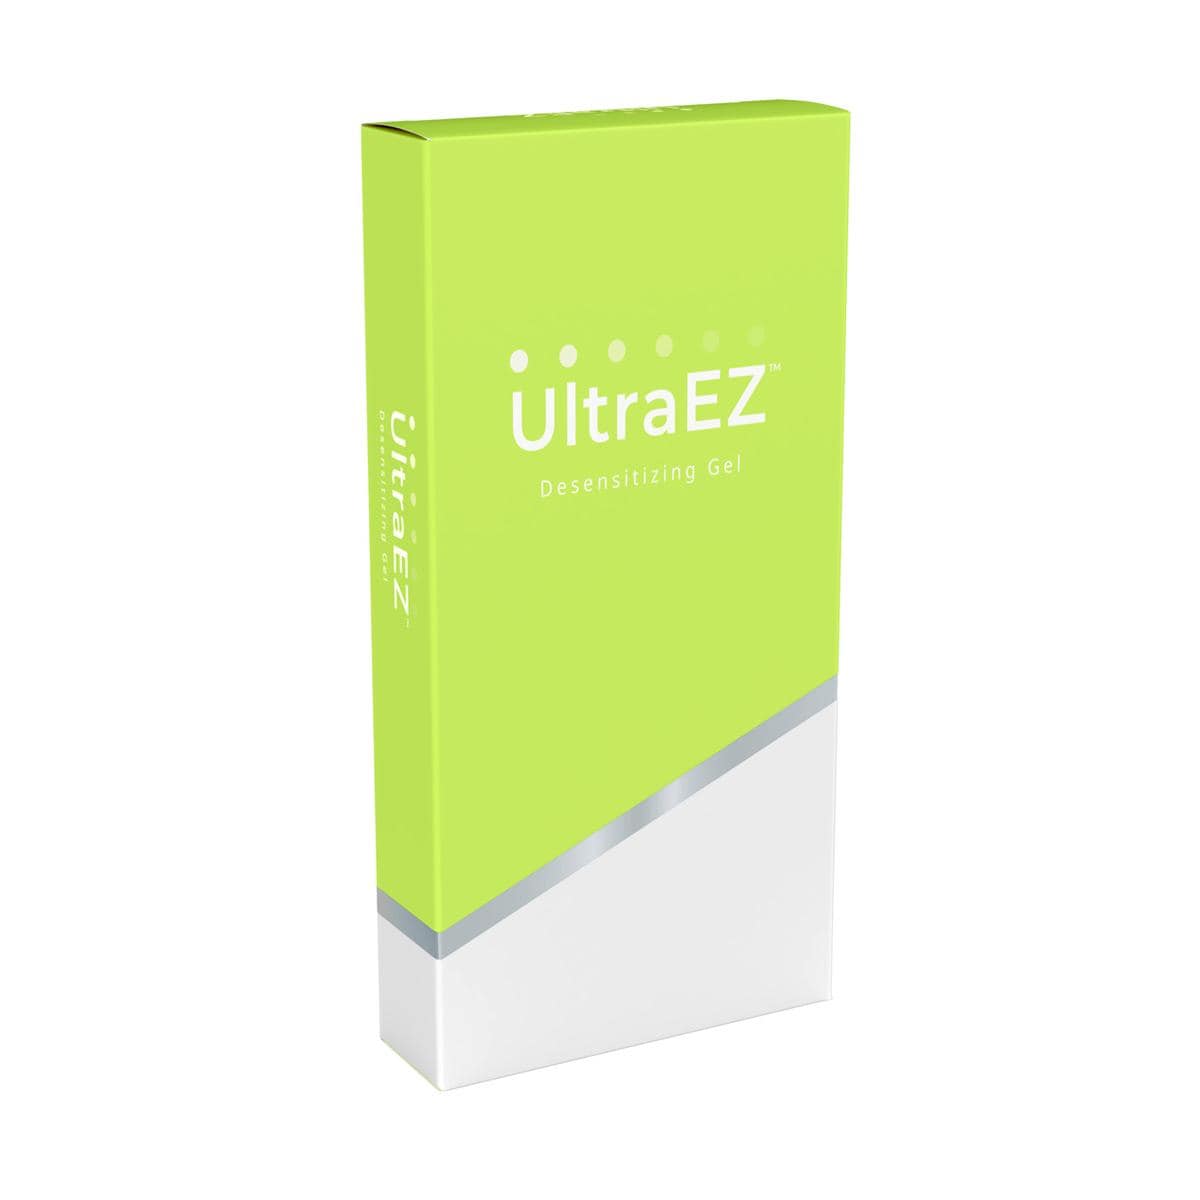 UltraEZ spuitjes - UP 1008, 4x 1,2 ml